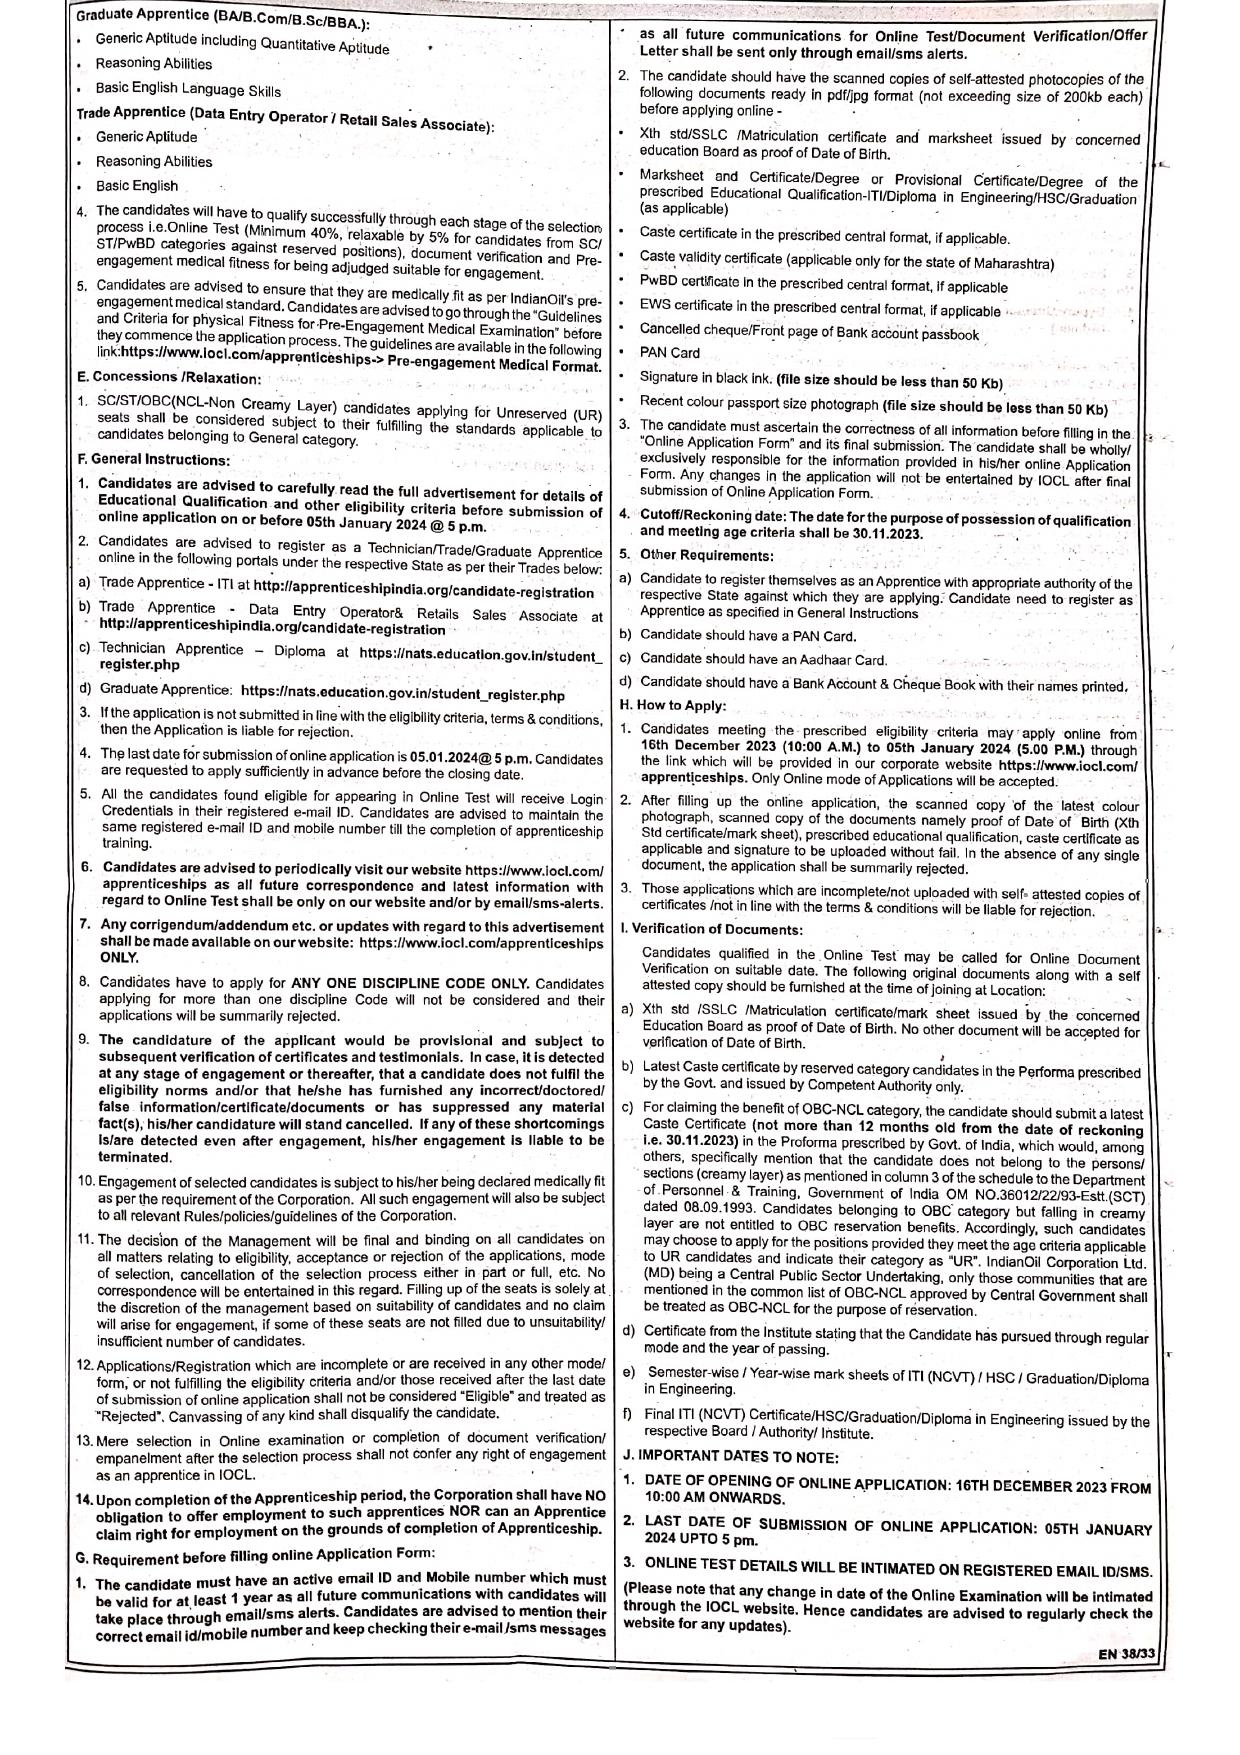 Indian Oil Corporation (IOCL) Technician/ Graduate/ Trade Apprentice Recruitment 2023 - Page 5